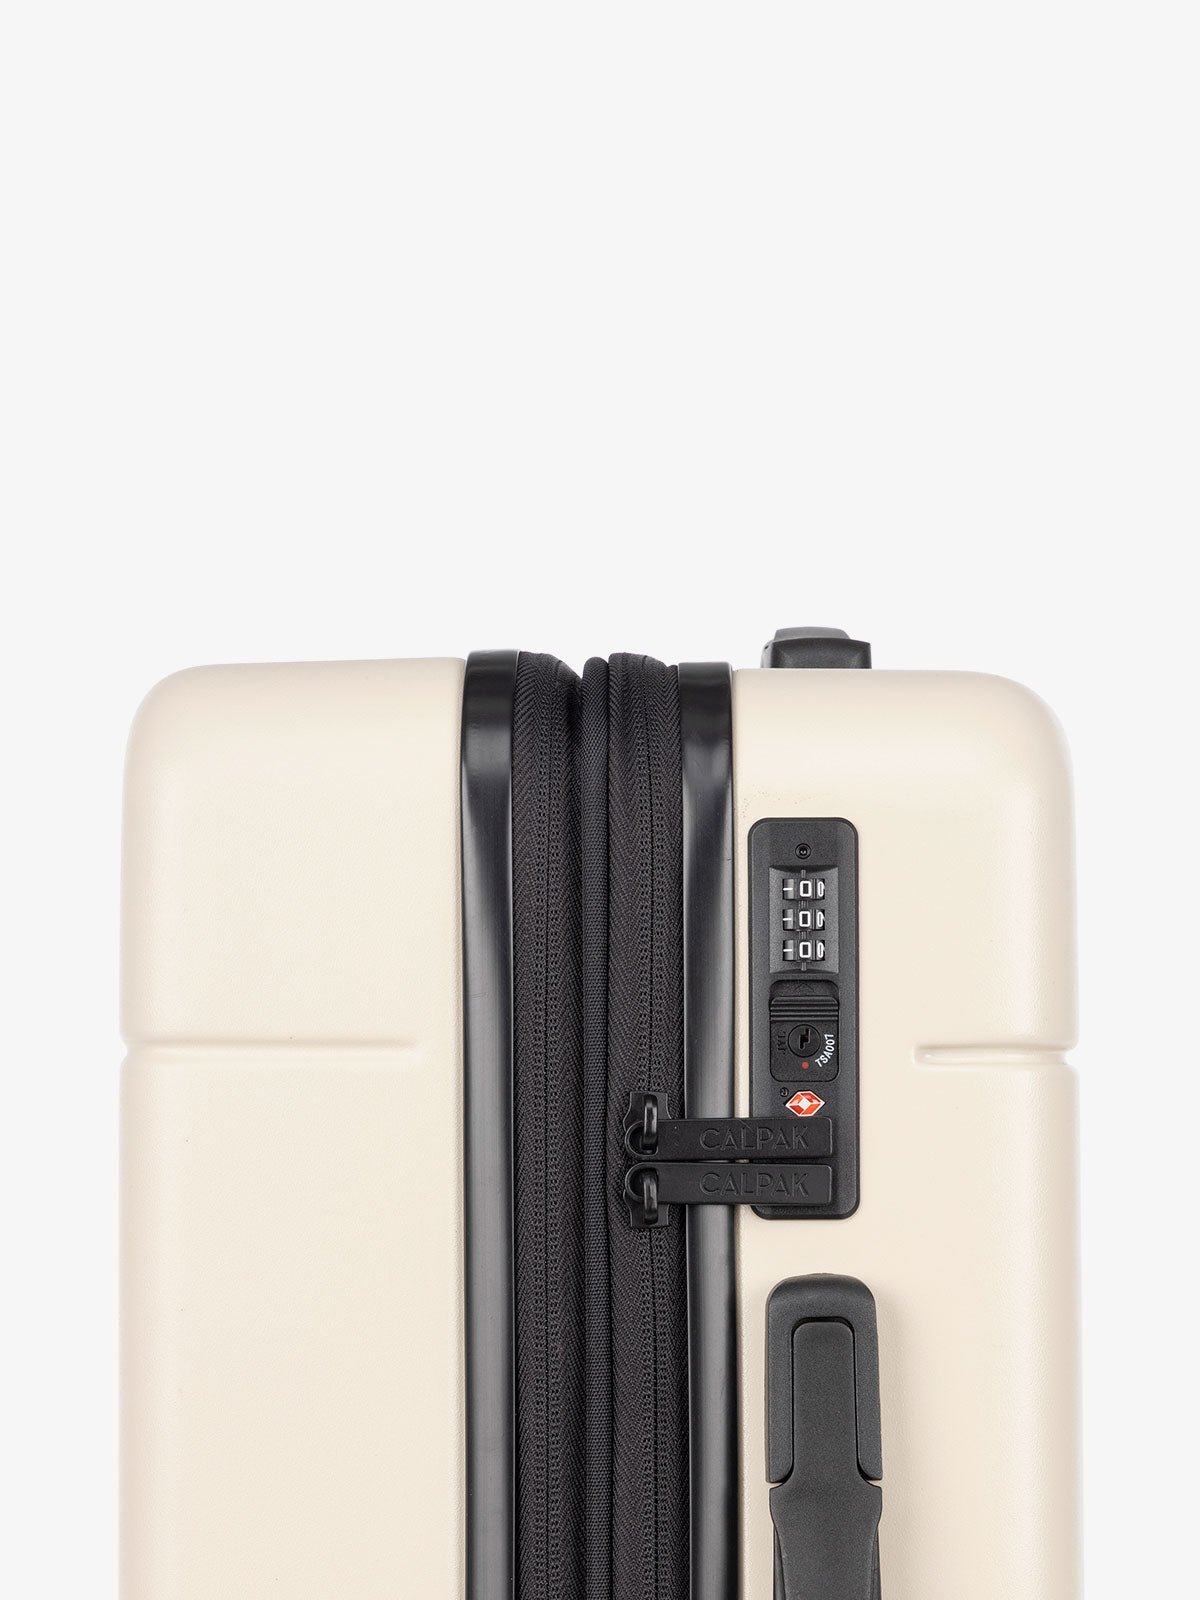 cream linen CALPAK Hue trunk luggage with built in TSA lock